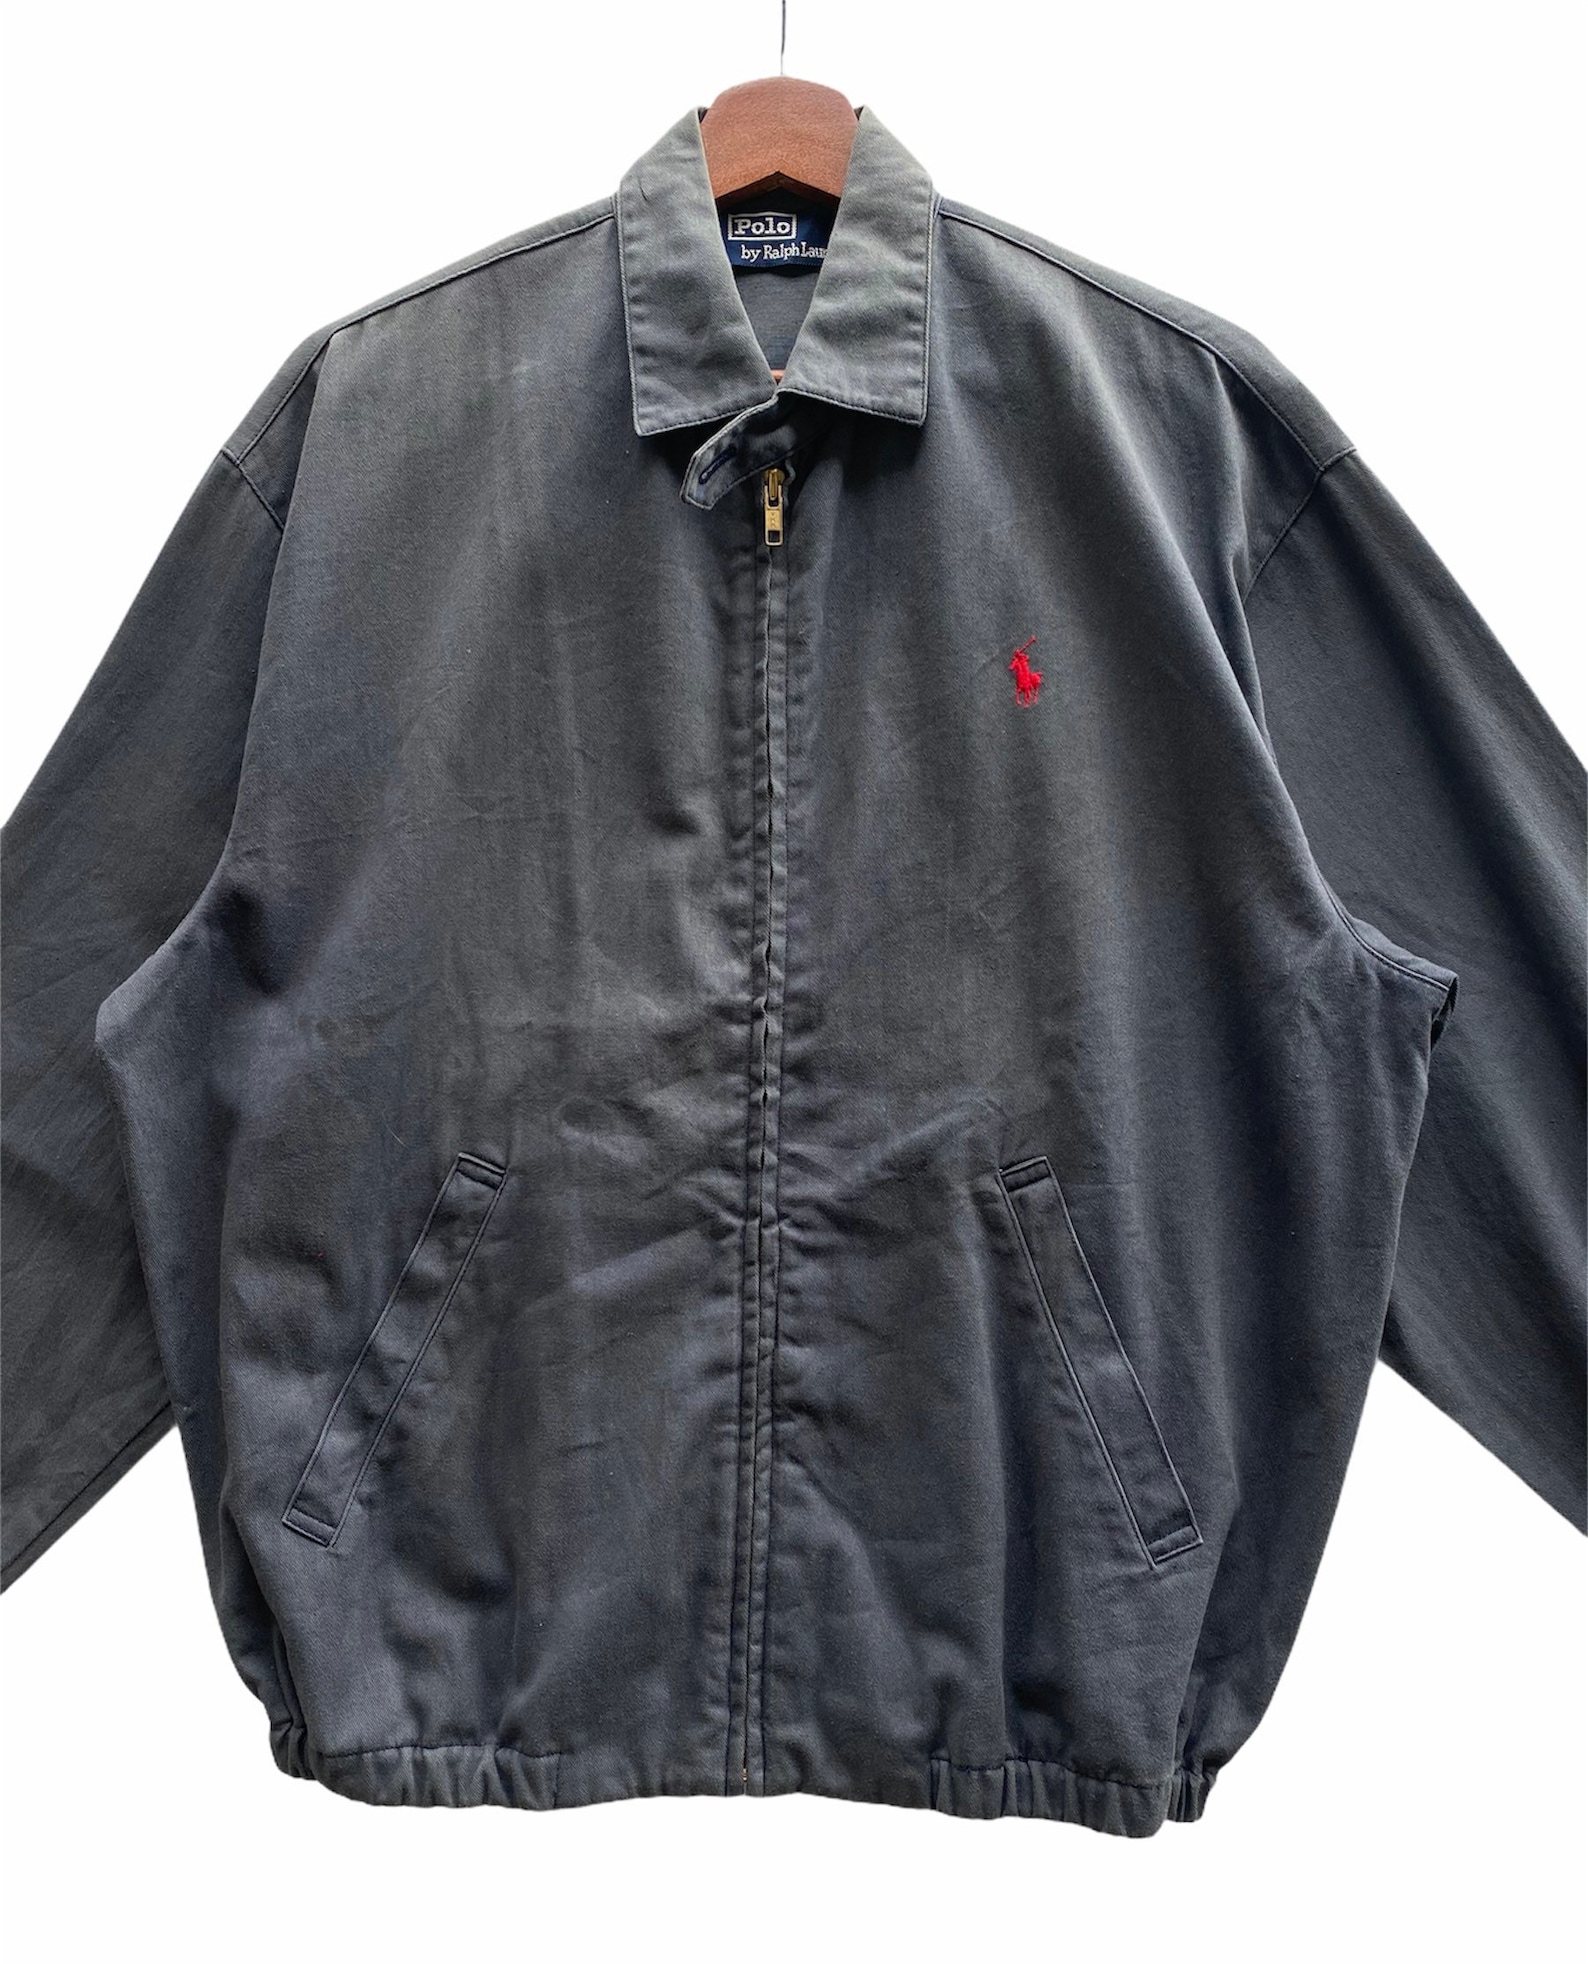 Polo Ralph Lauren Vintage 90s Harrington Jacket | Etsy